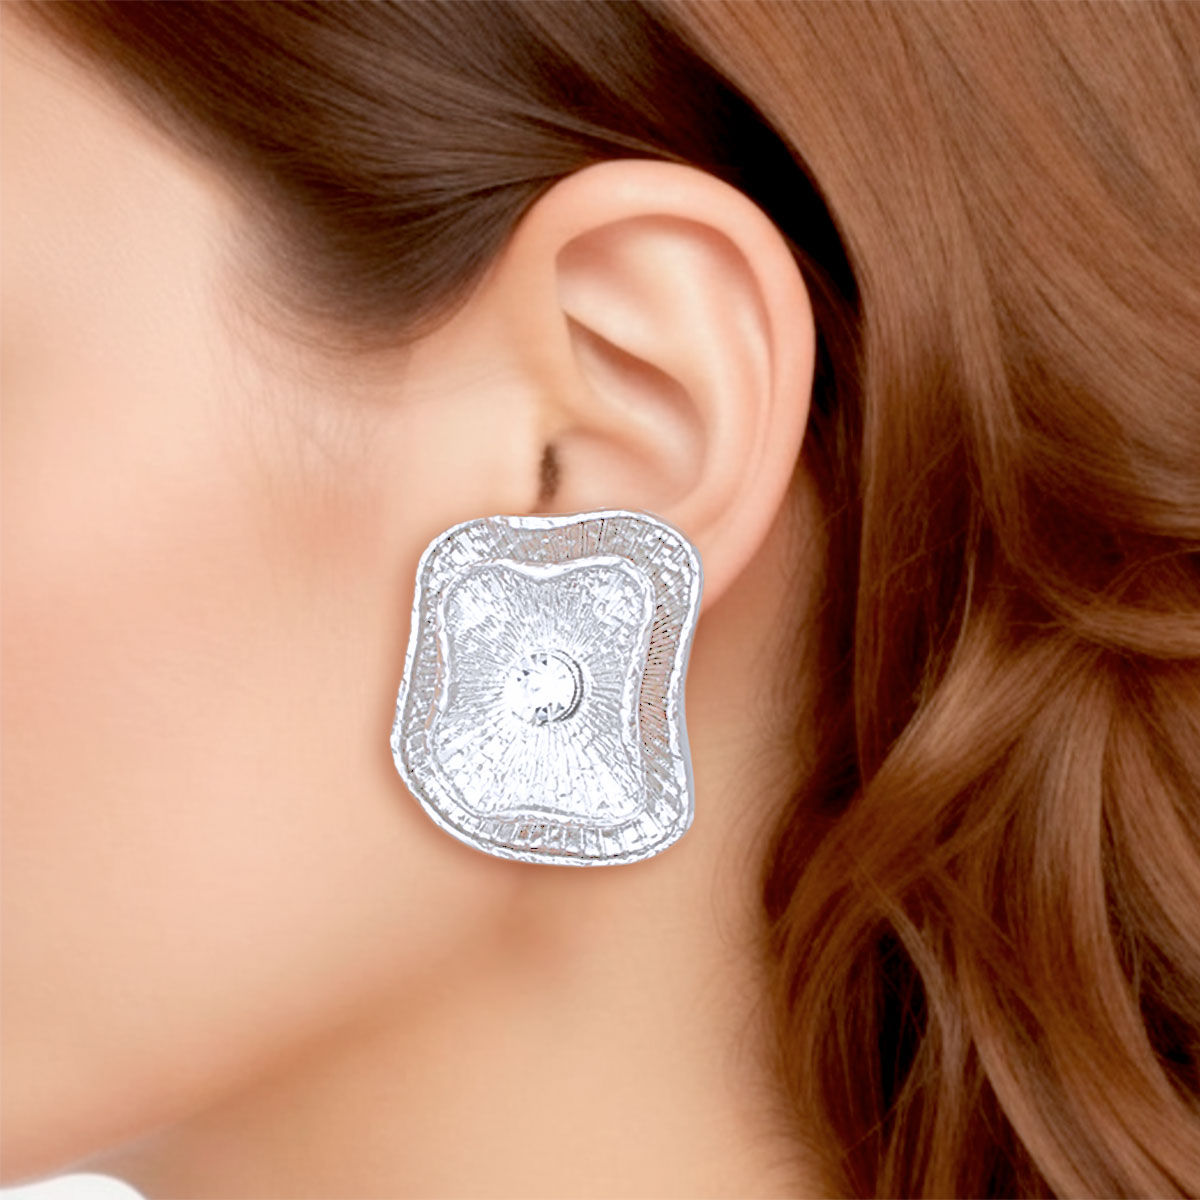 Clip On Silver Medium Vintage Earrings for Women